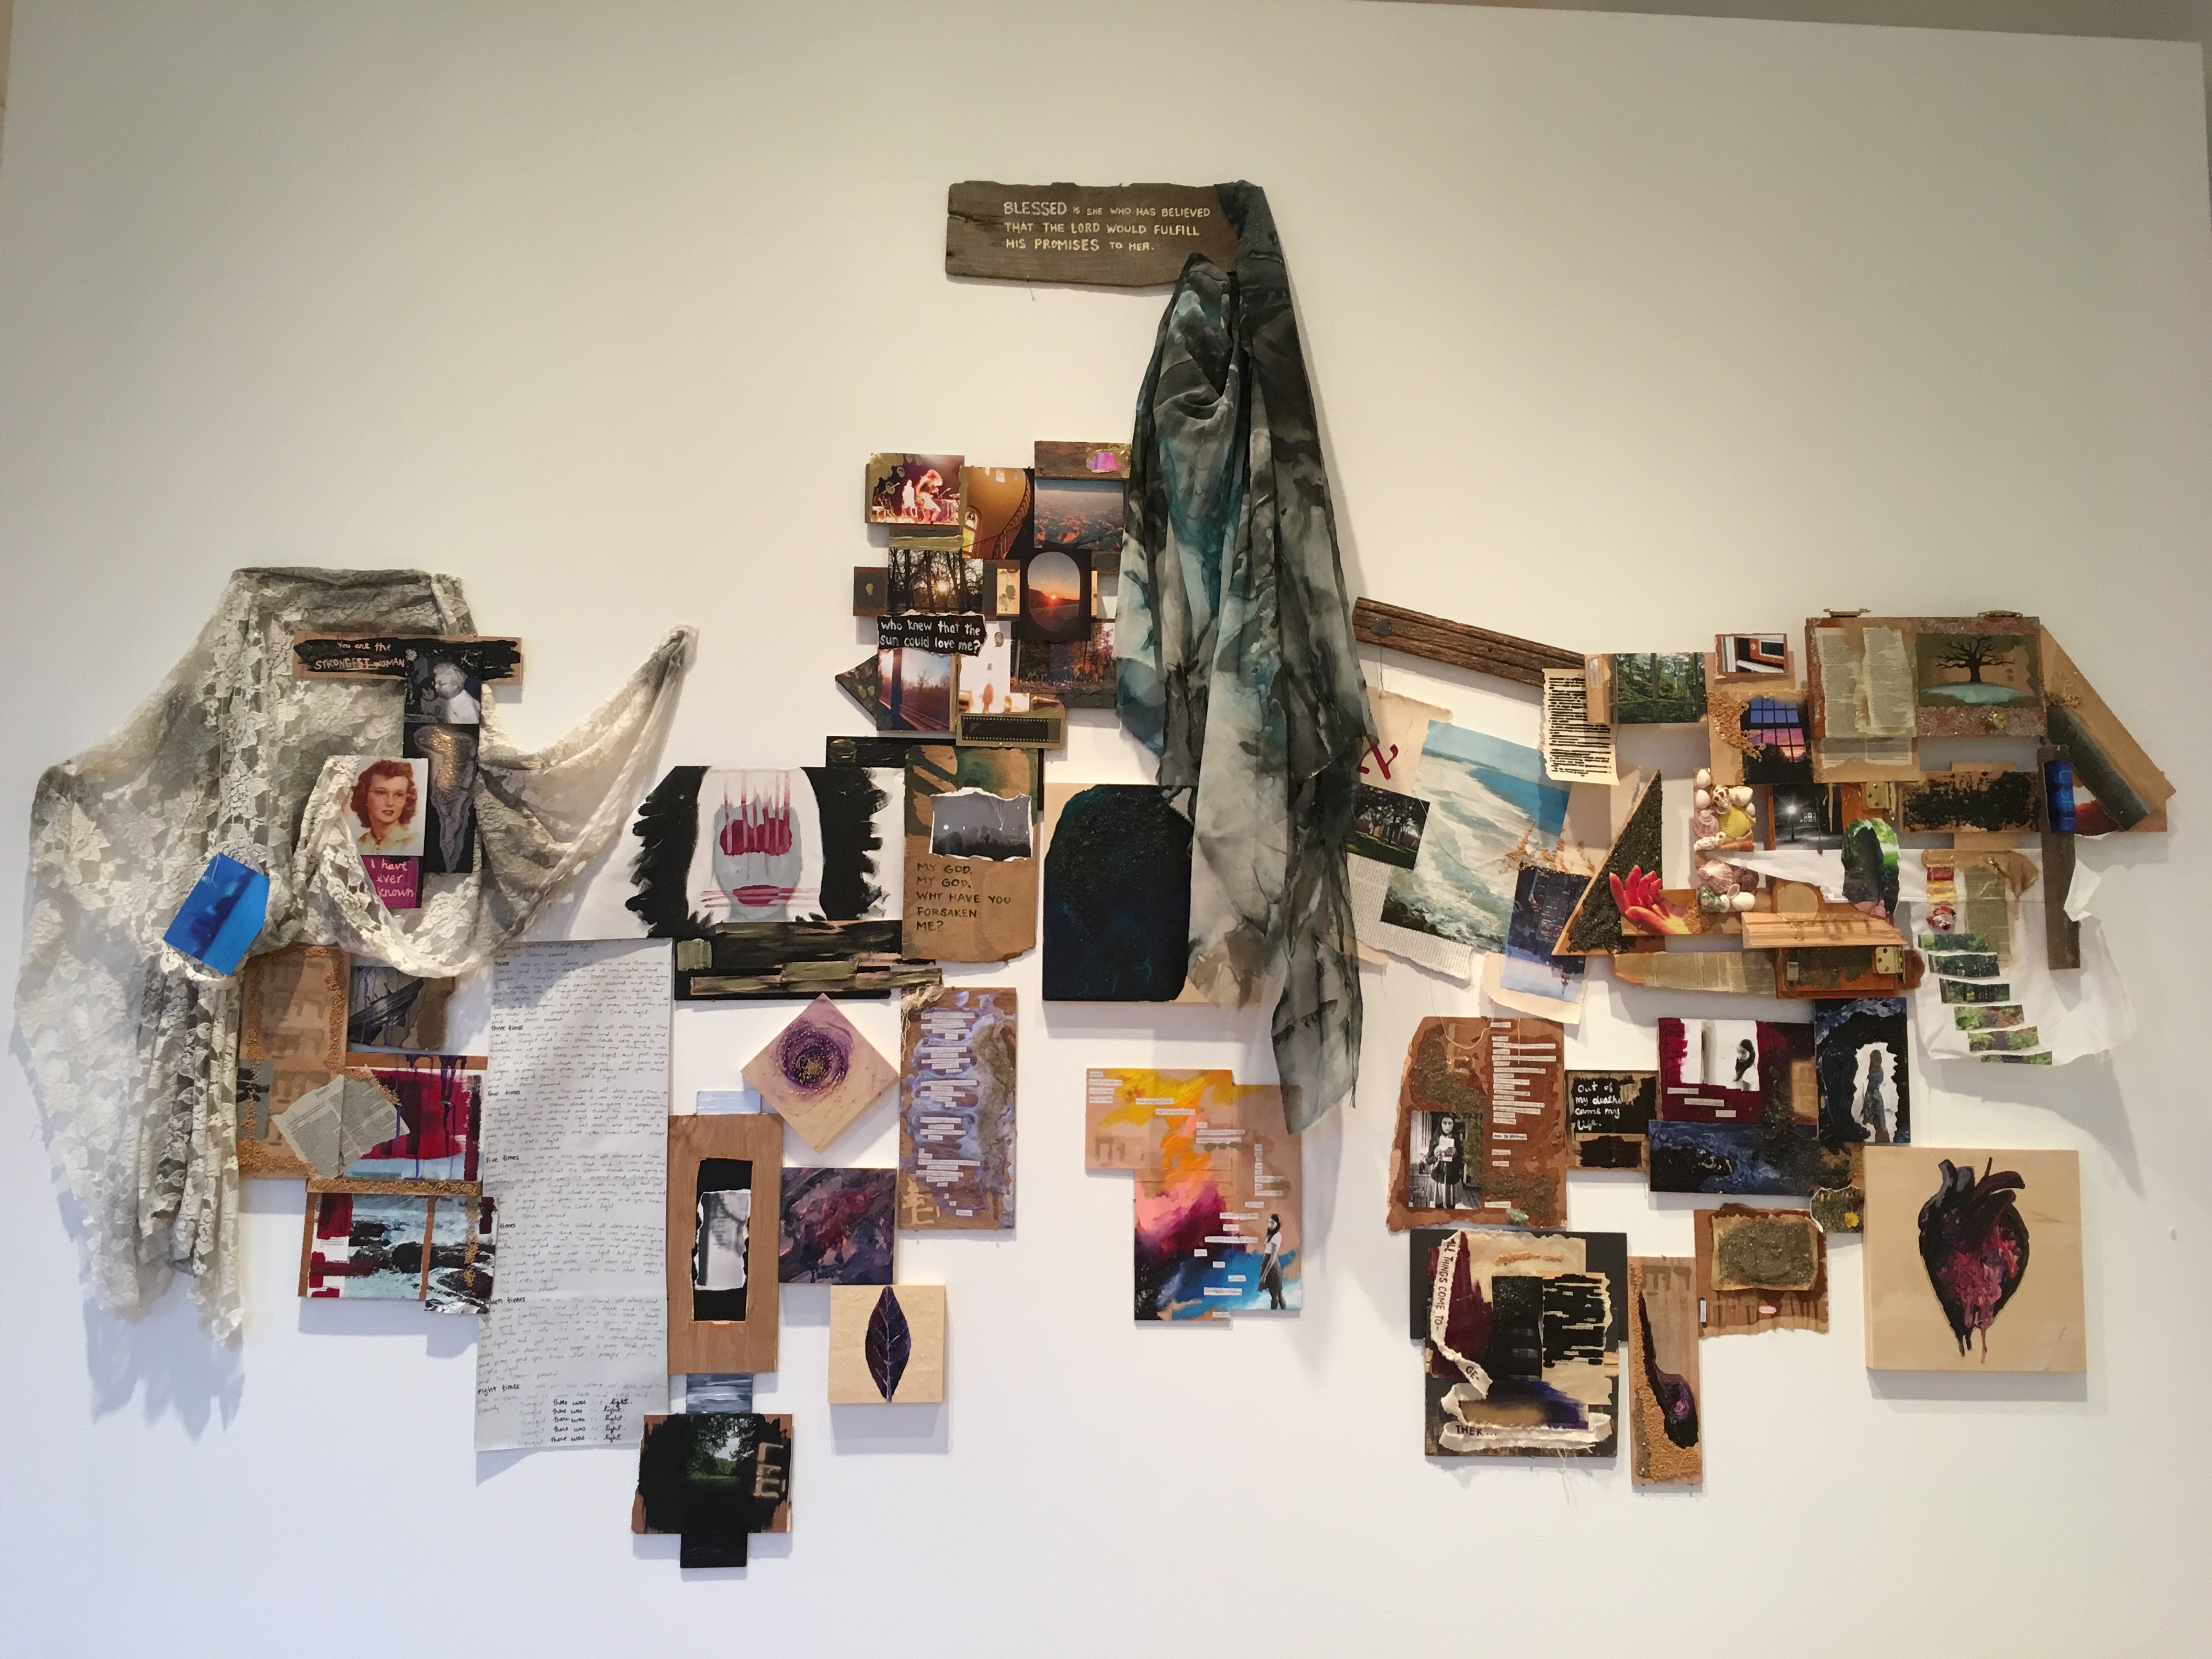 Studio Art Senior Theses Explore Identity Through Abstract Art | The ...